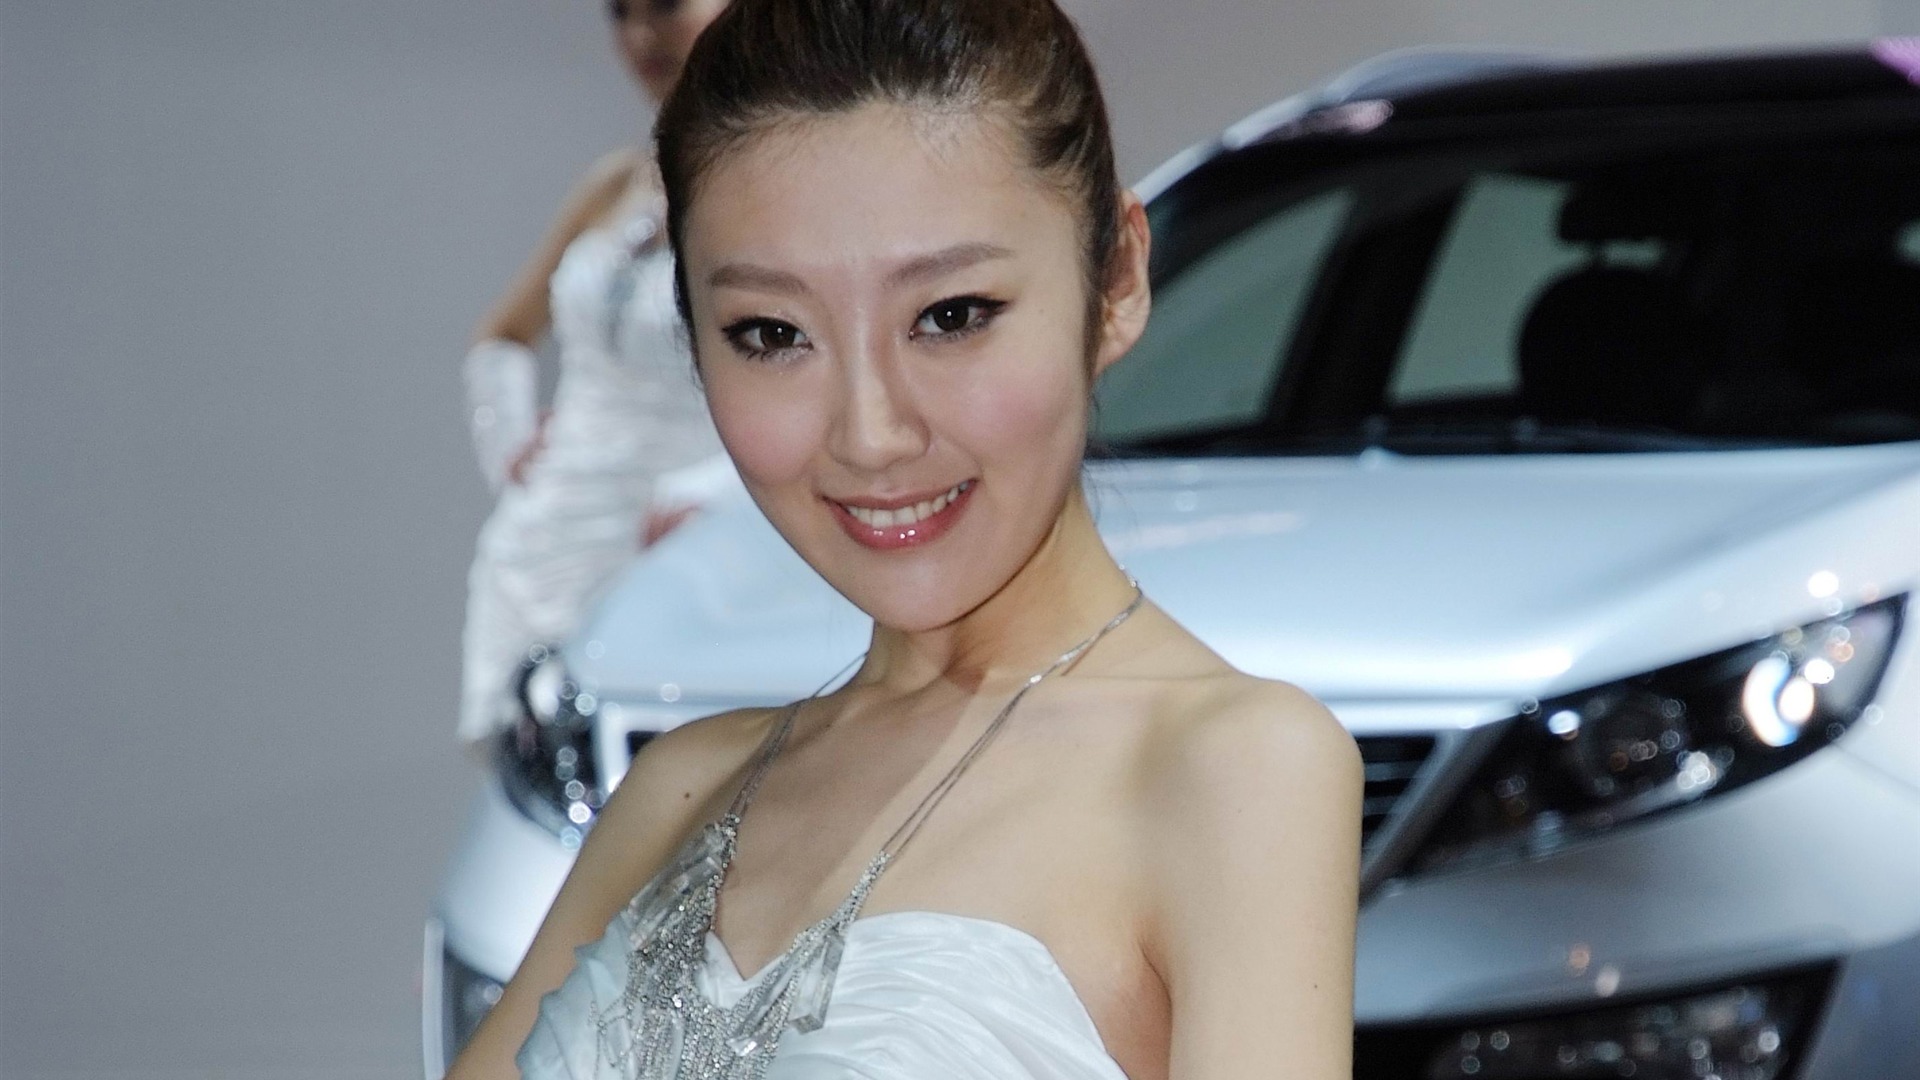 2010 Beijing International Auto Show beauty (rebar works) #21 - 1920x1080